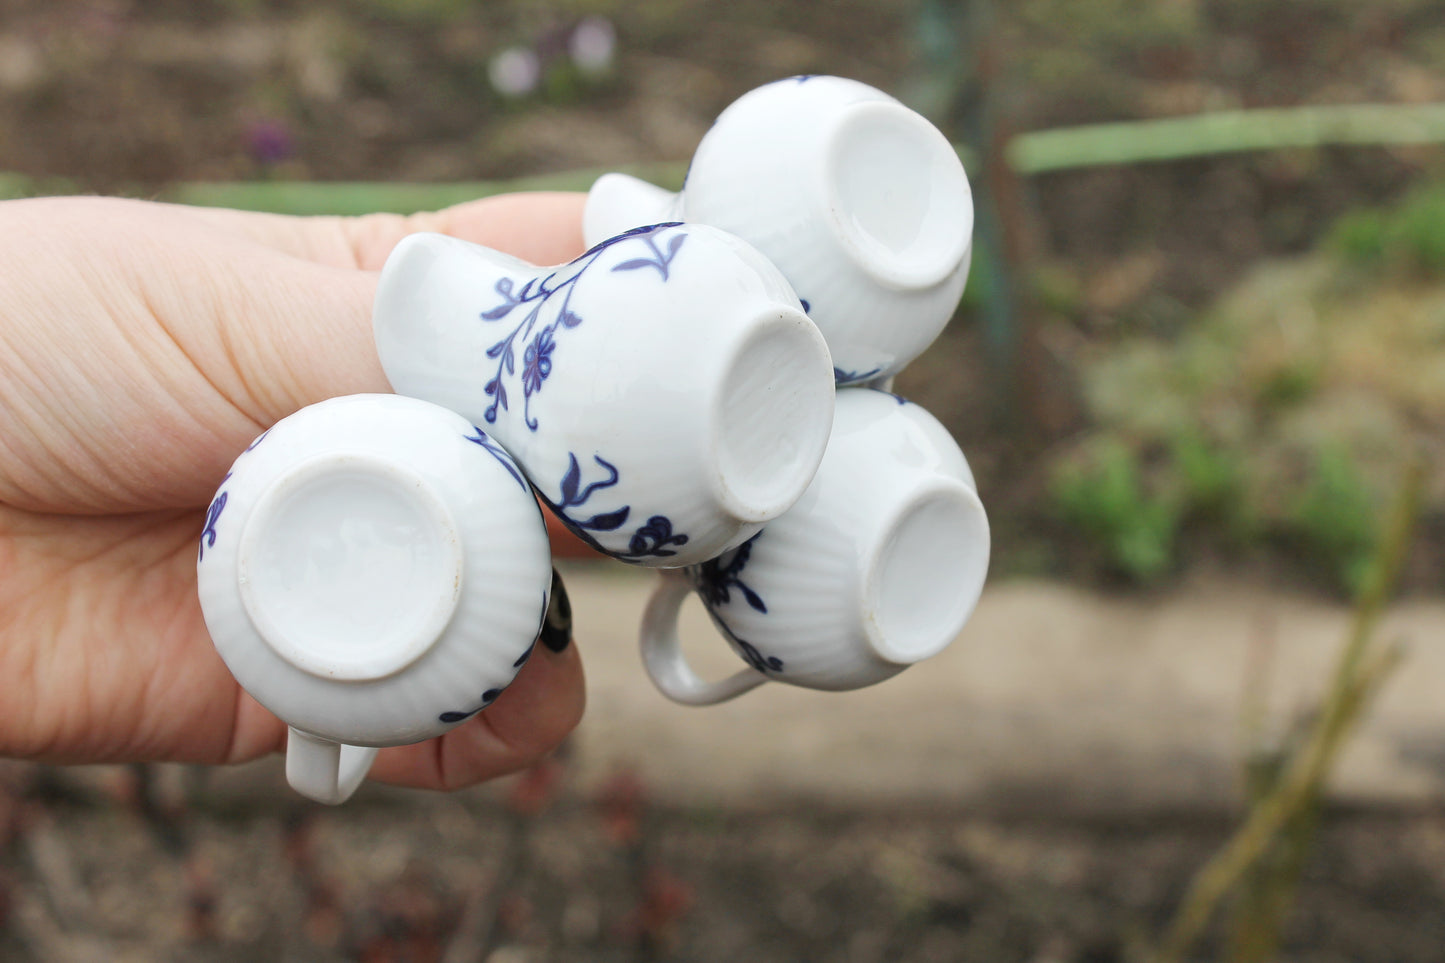 Set of 4 Vintage Porcelain souvenir mini jugs - made in Germany - gift mini jugs - 1980-1990s